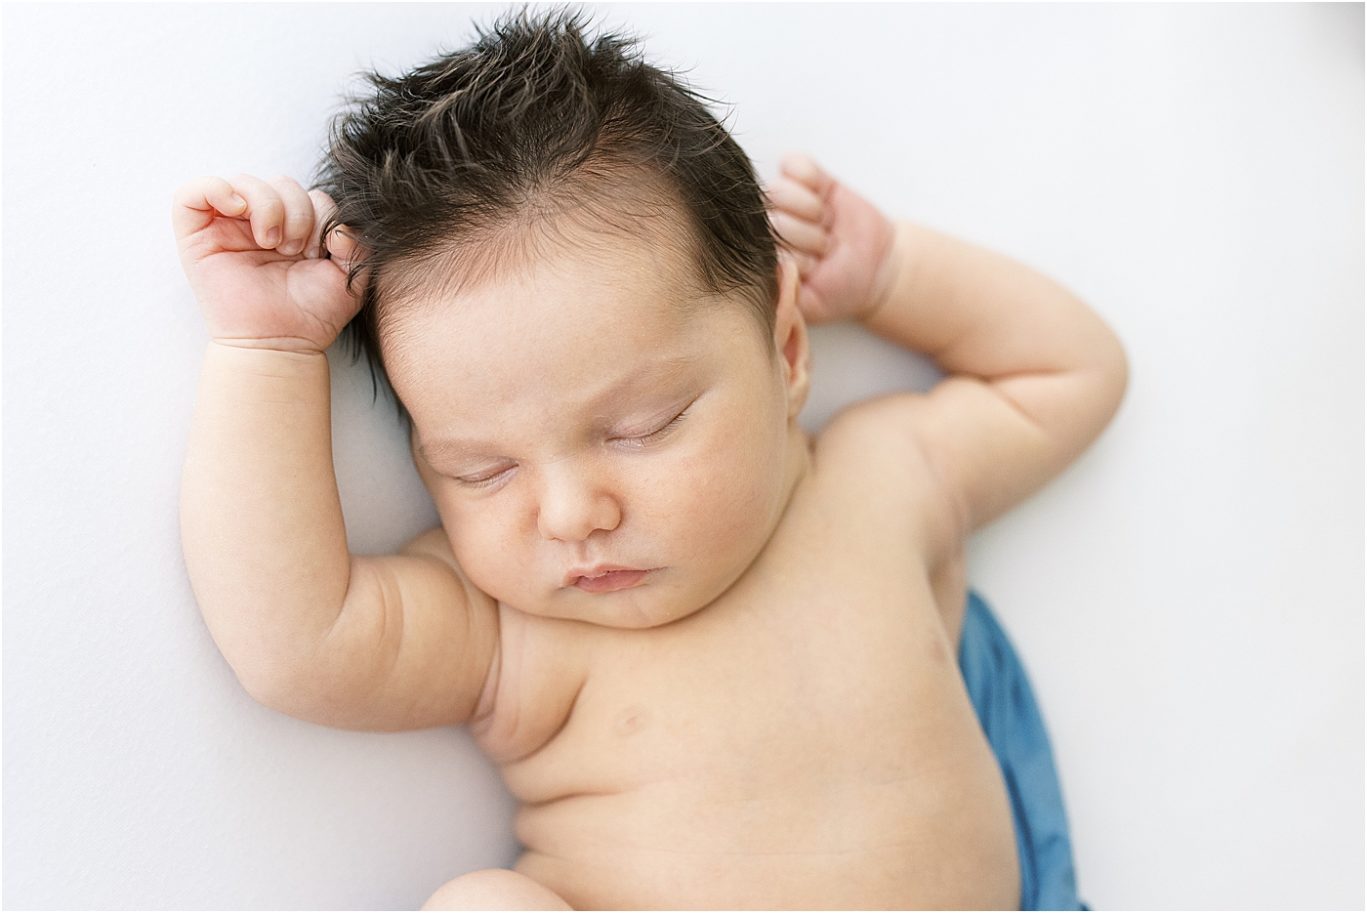 Baby boy newborn photo in Indiana.